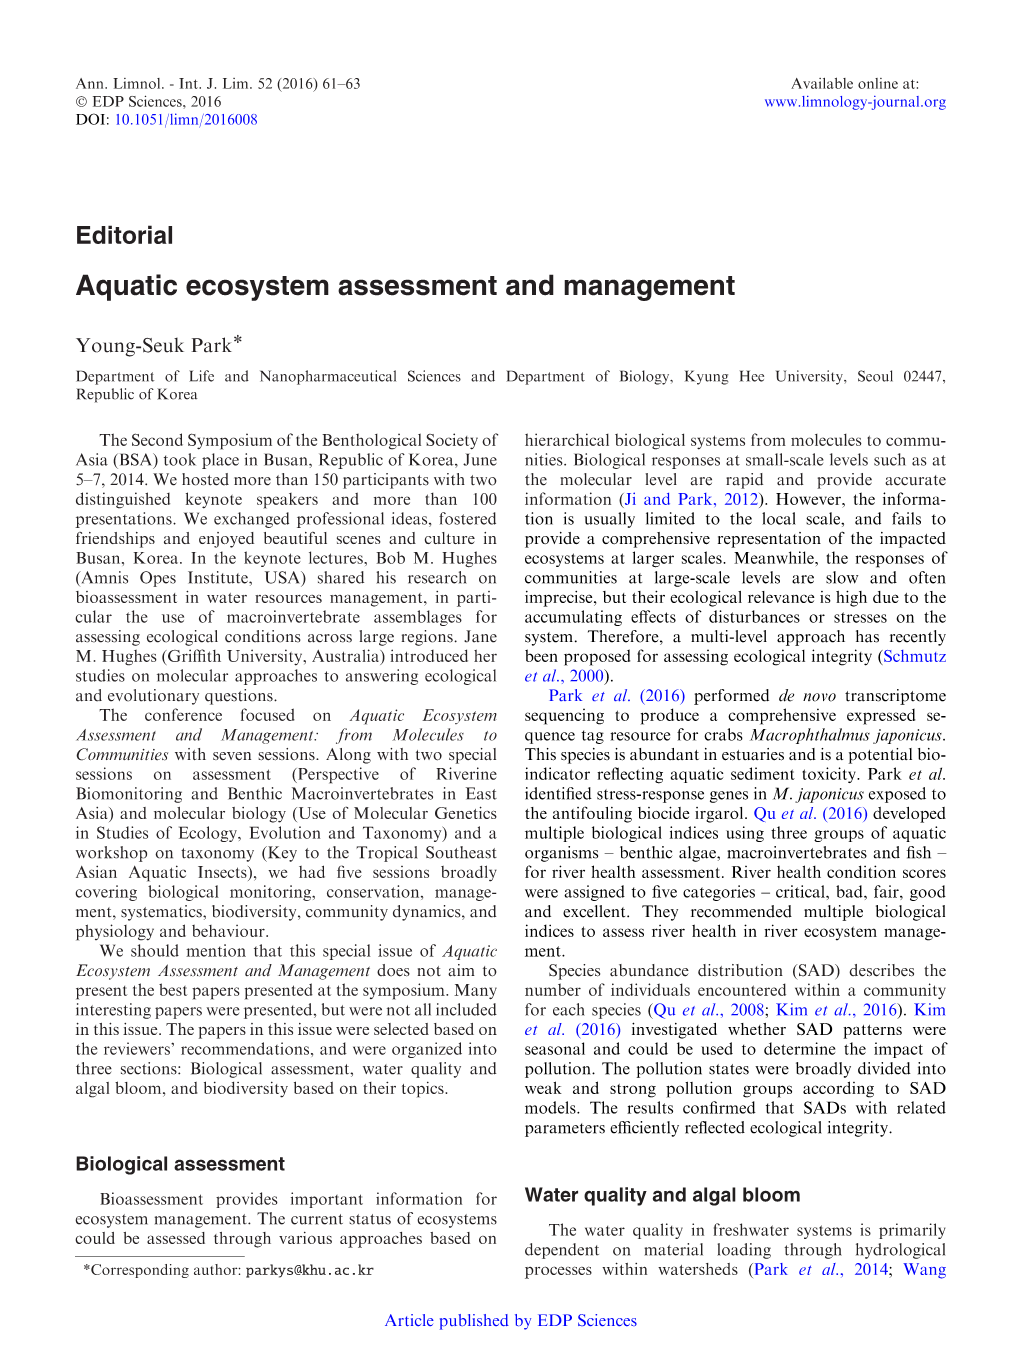 Aquatic Ecosystem Assessment and Management